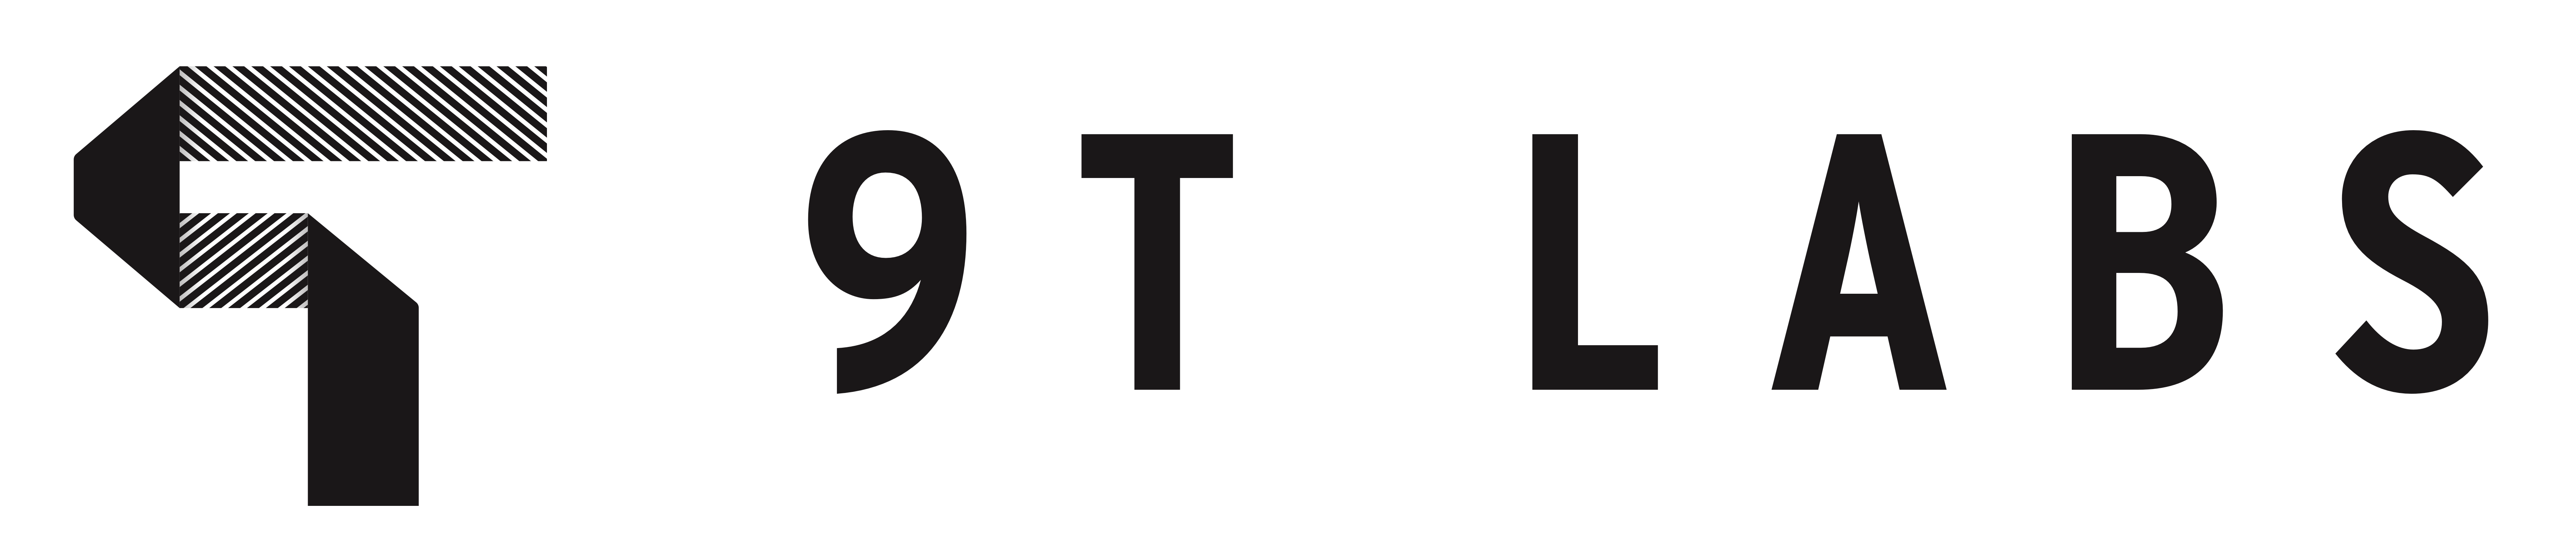 9t-labs logo